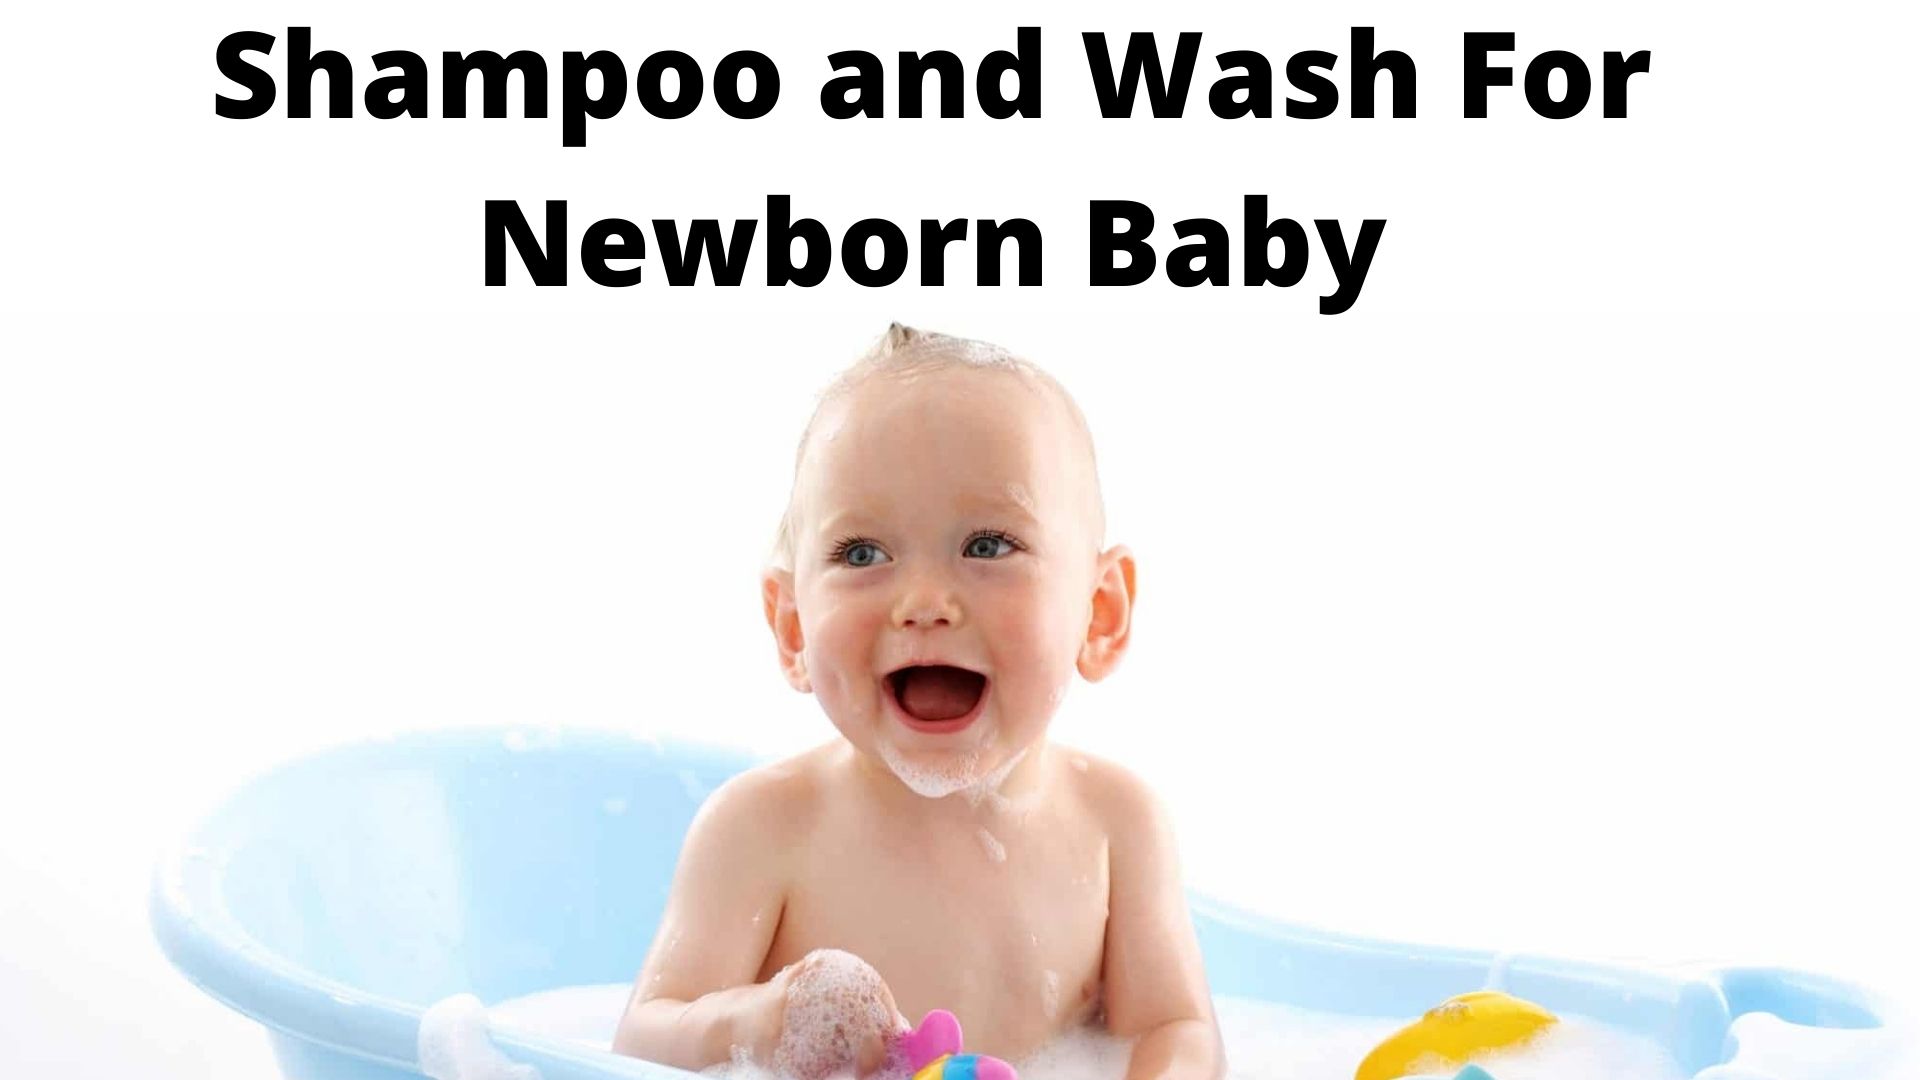 Shampoo and Wash For Newborn Baby